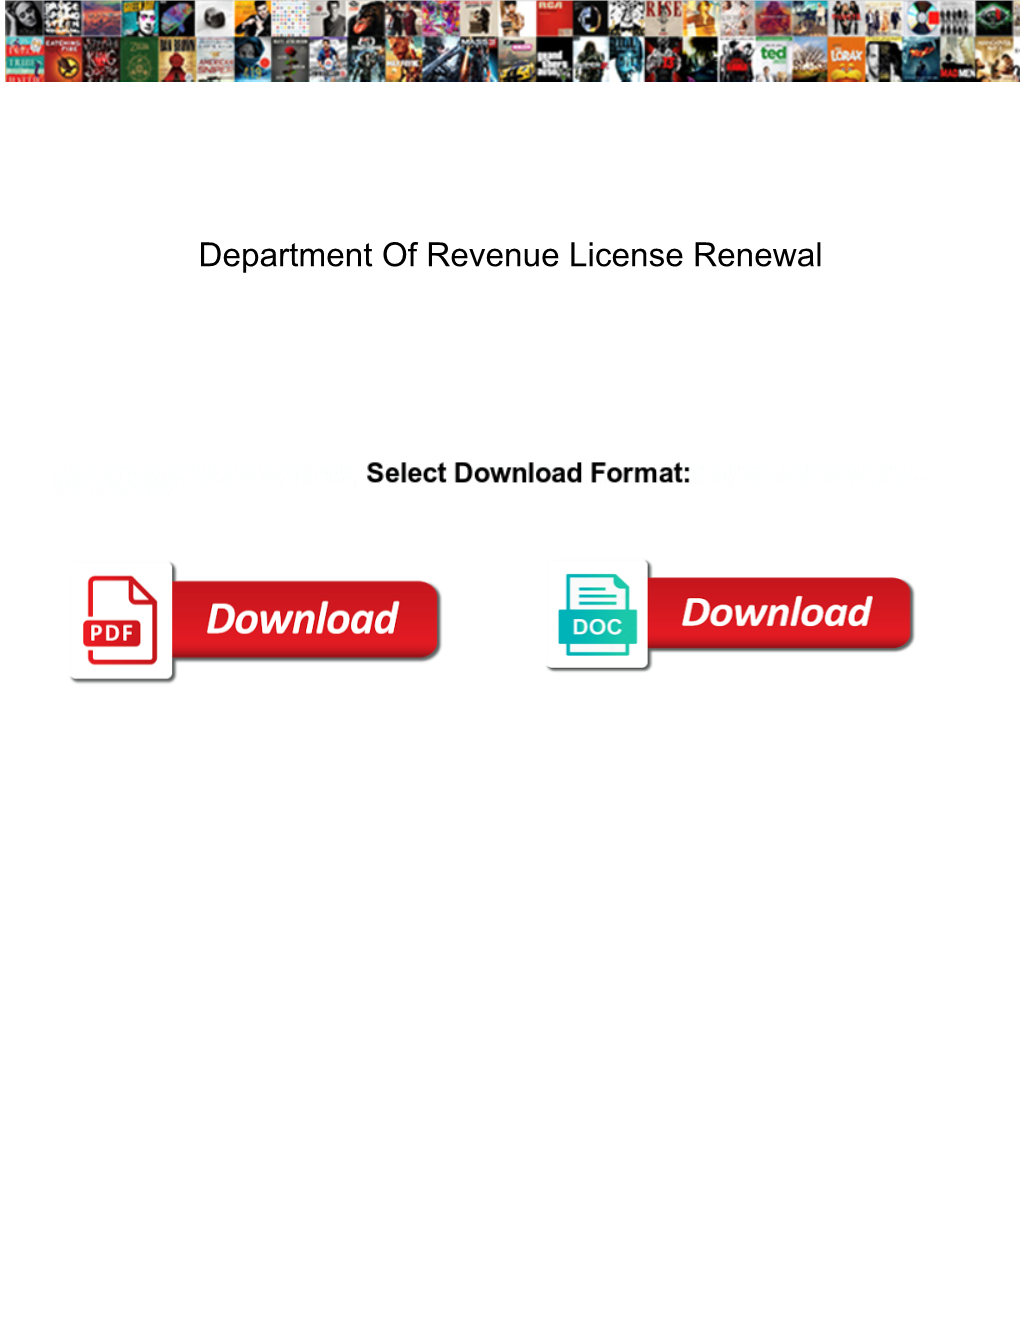 Department of Revenue License Renewal